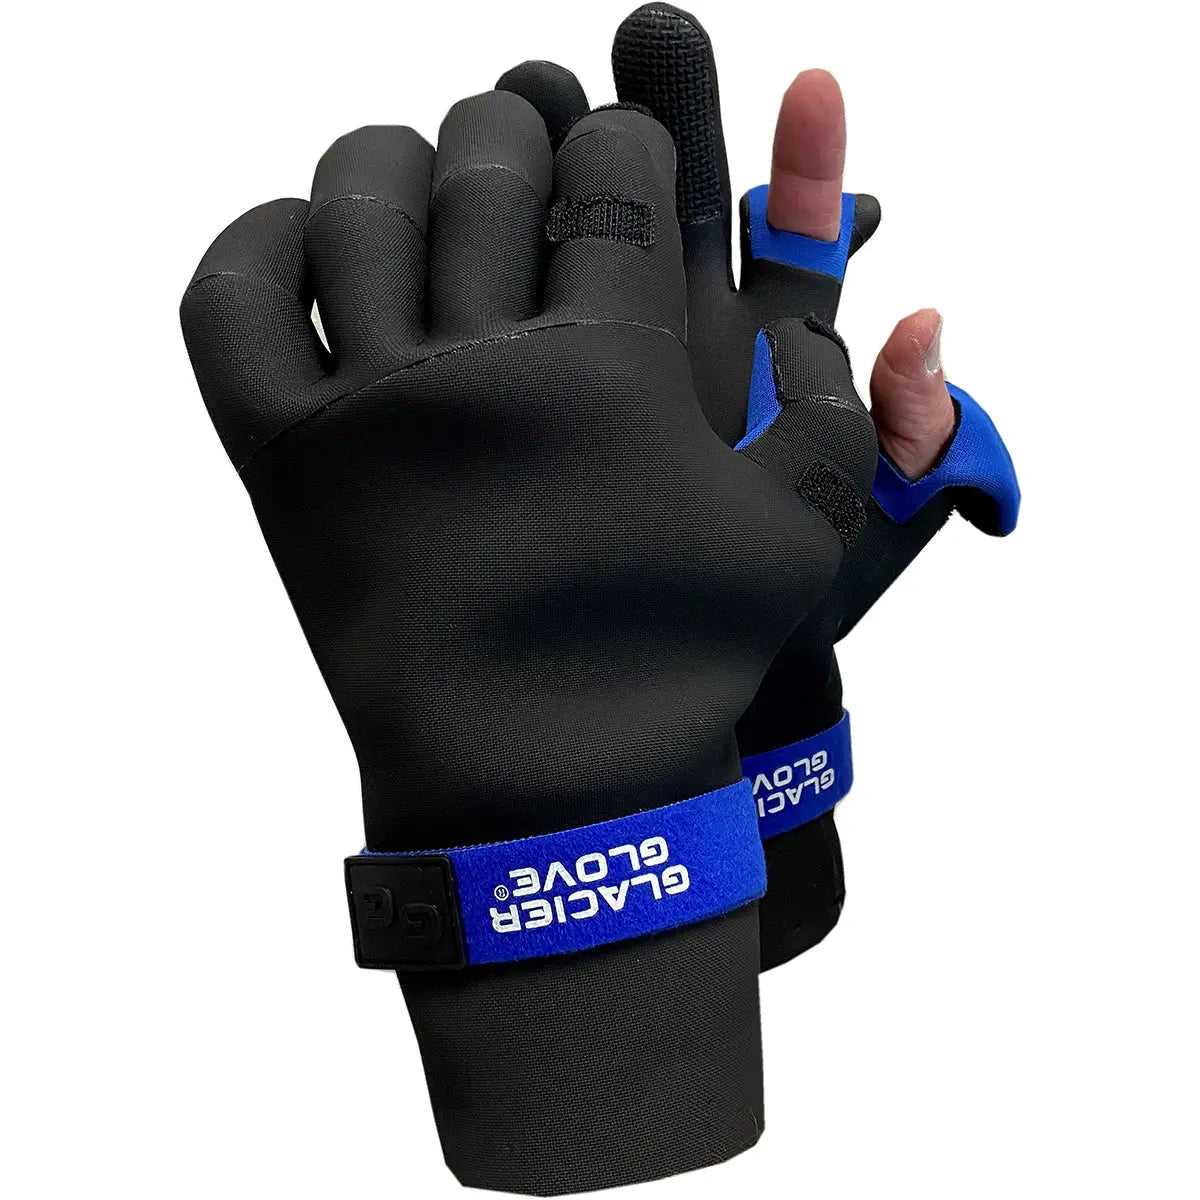 Glacier Pro Angler Glove, M, Black/blue